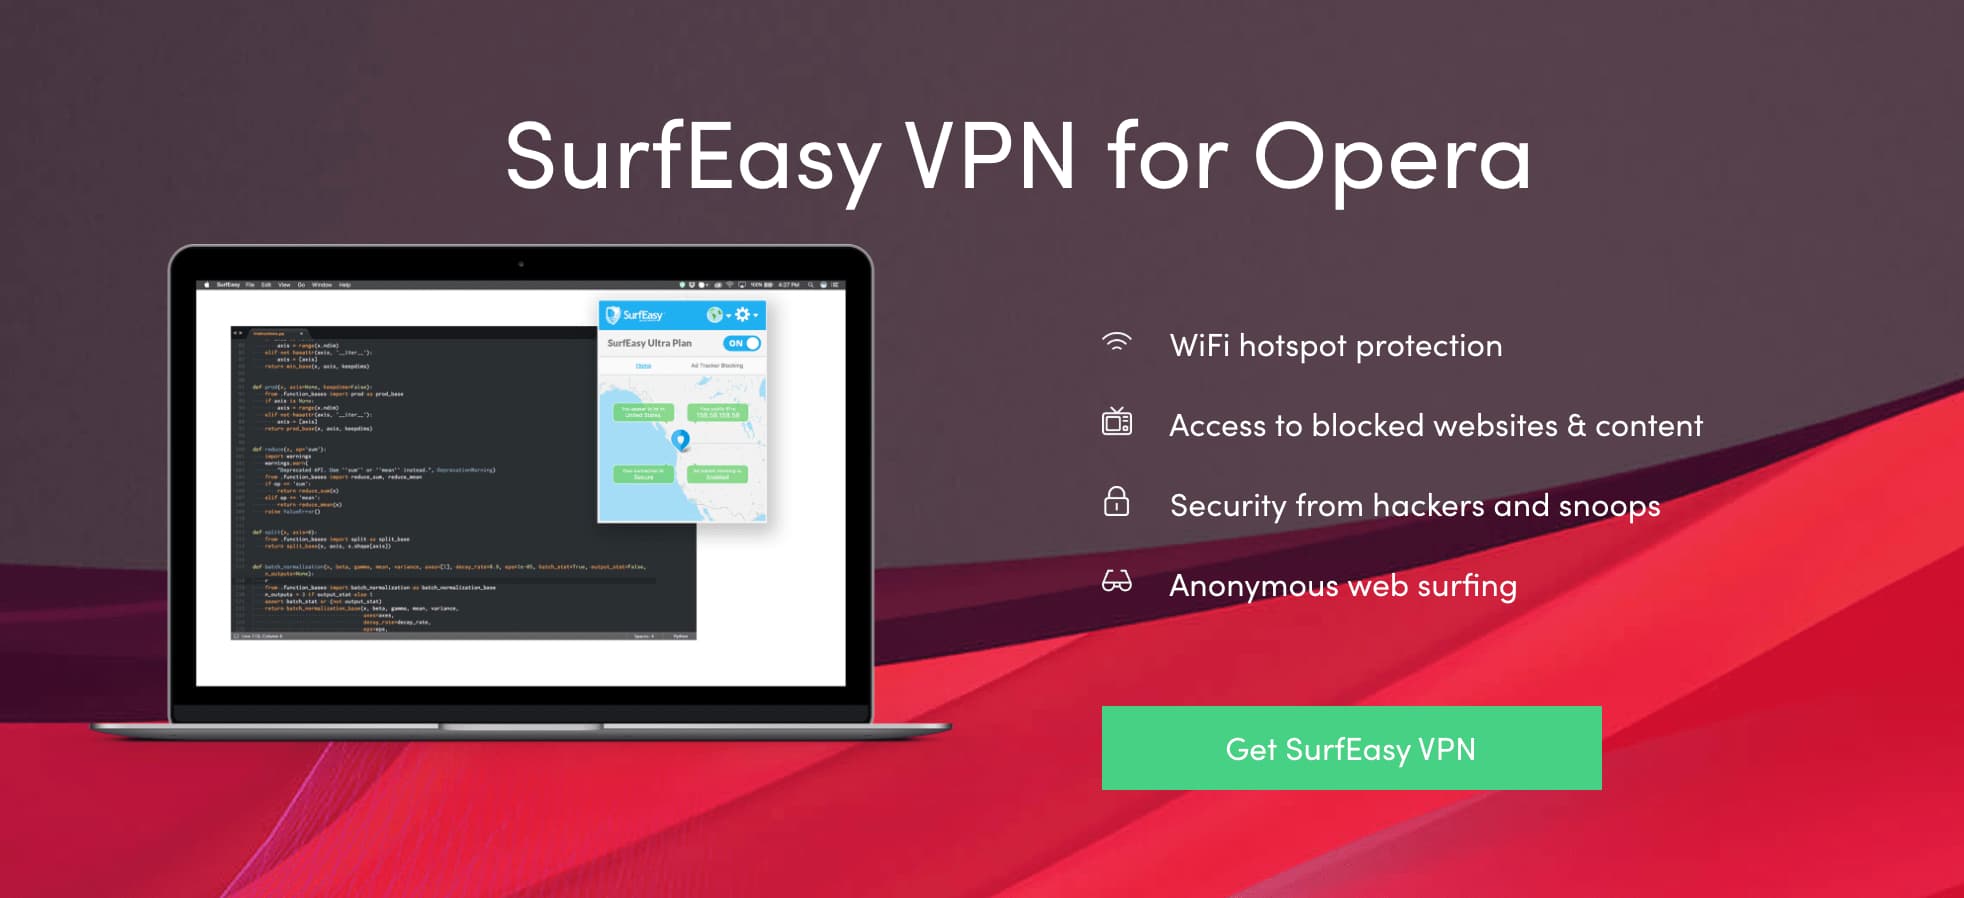 SurfEasy WebサイトにあるSurfEasy Opera Browser Extension広告のスクリーンショット